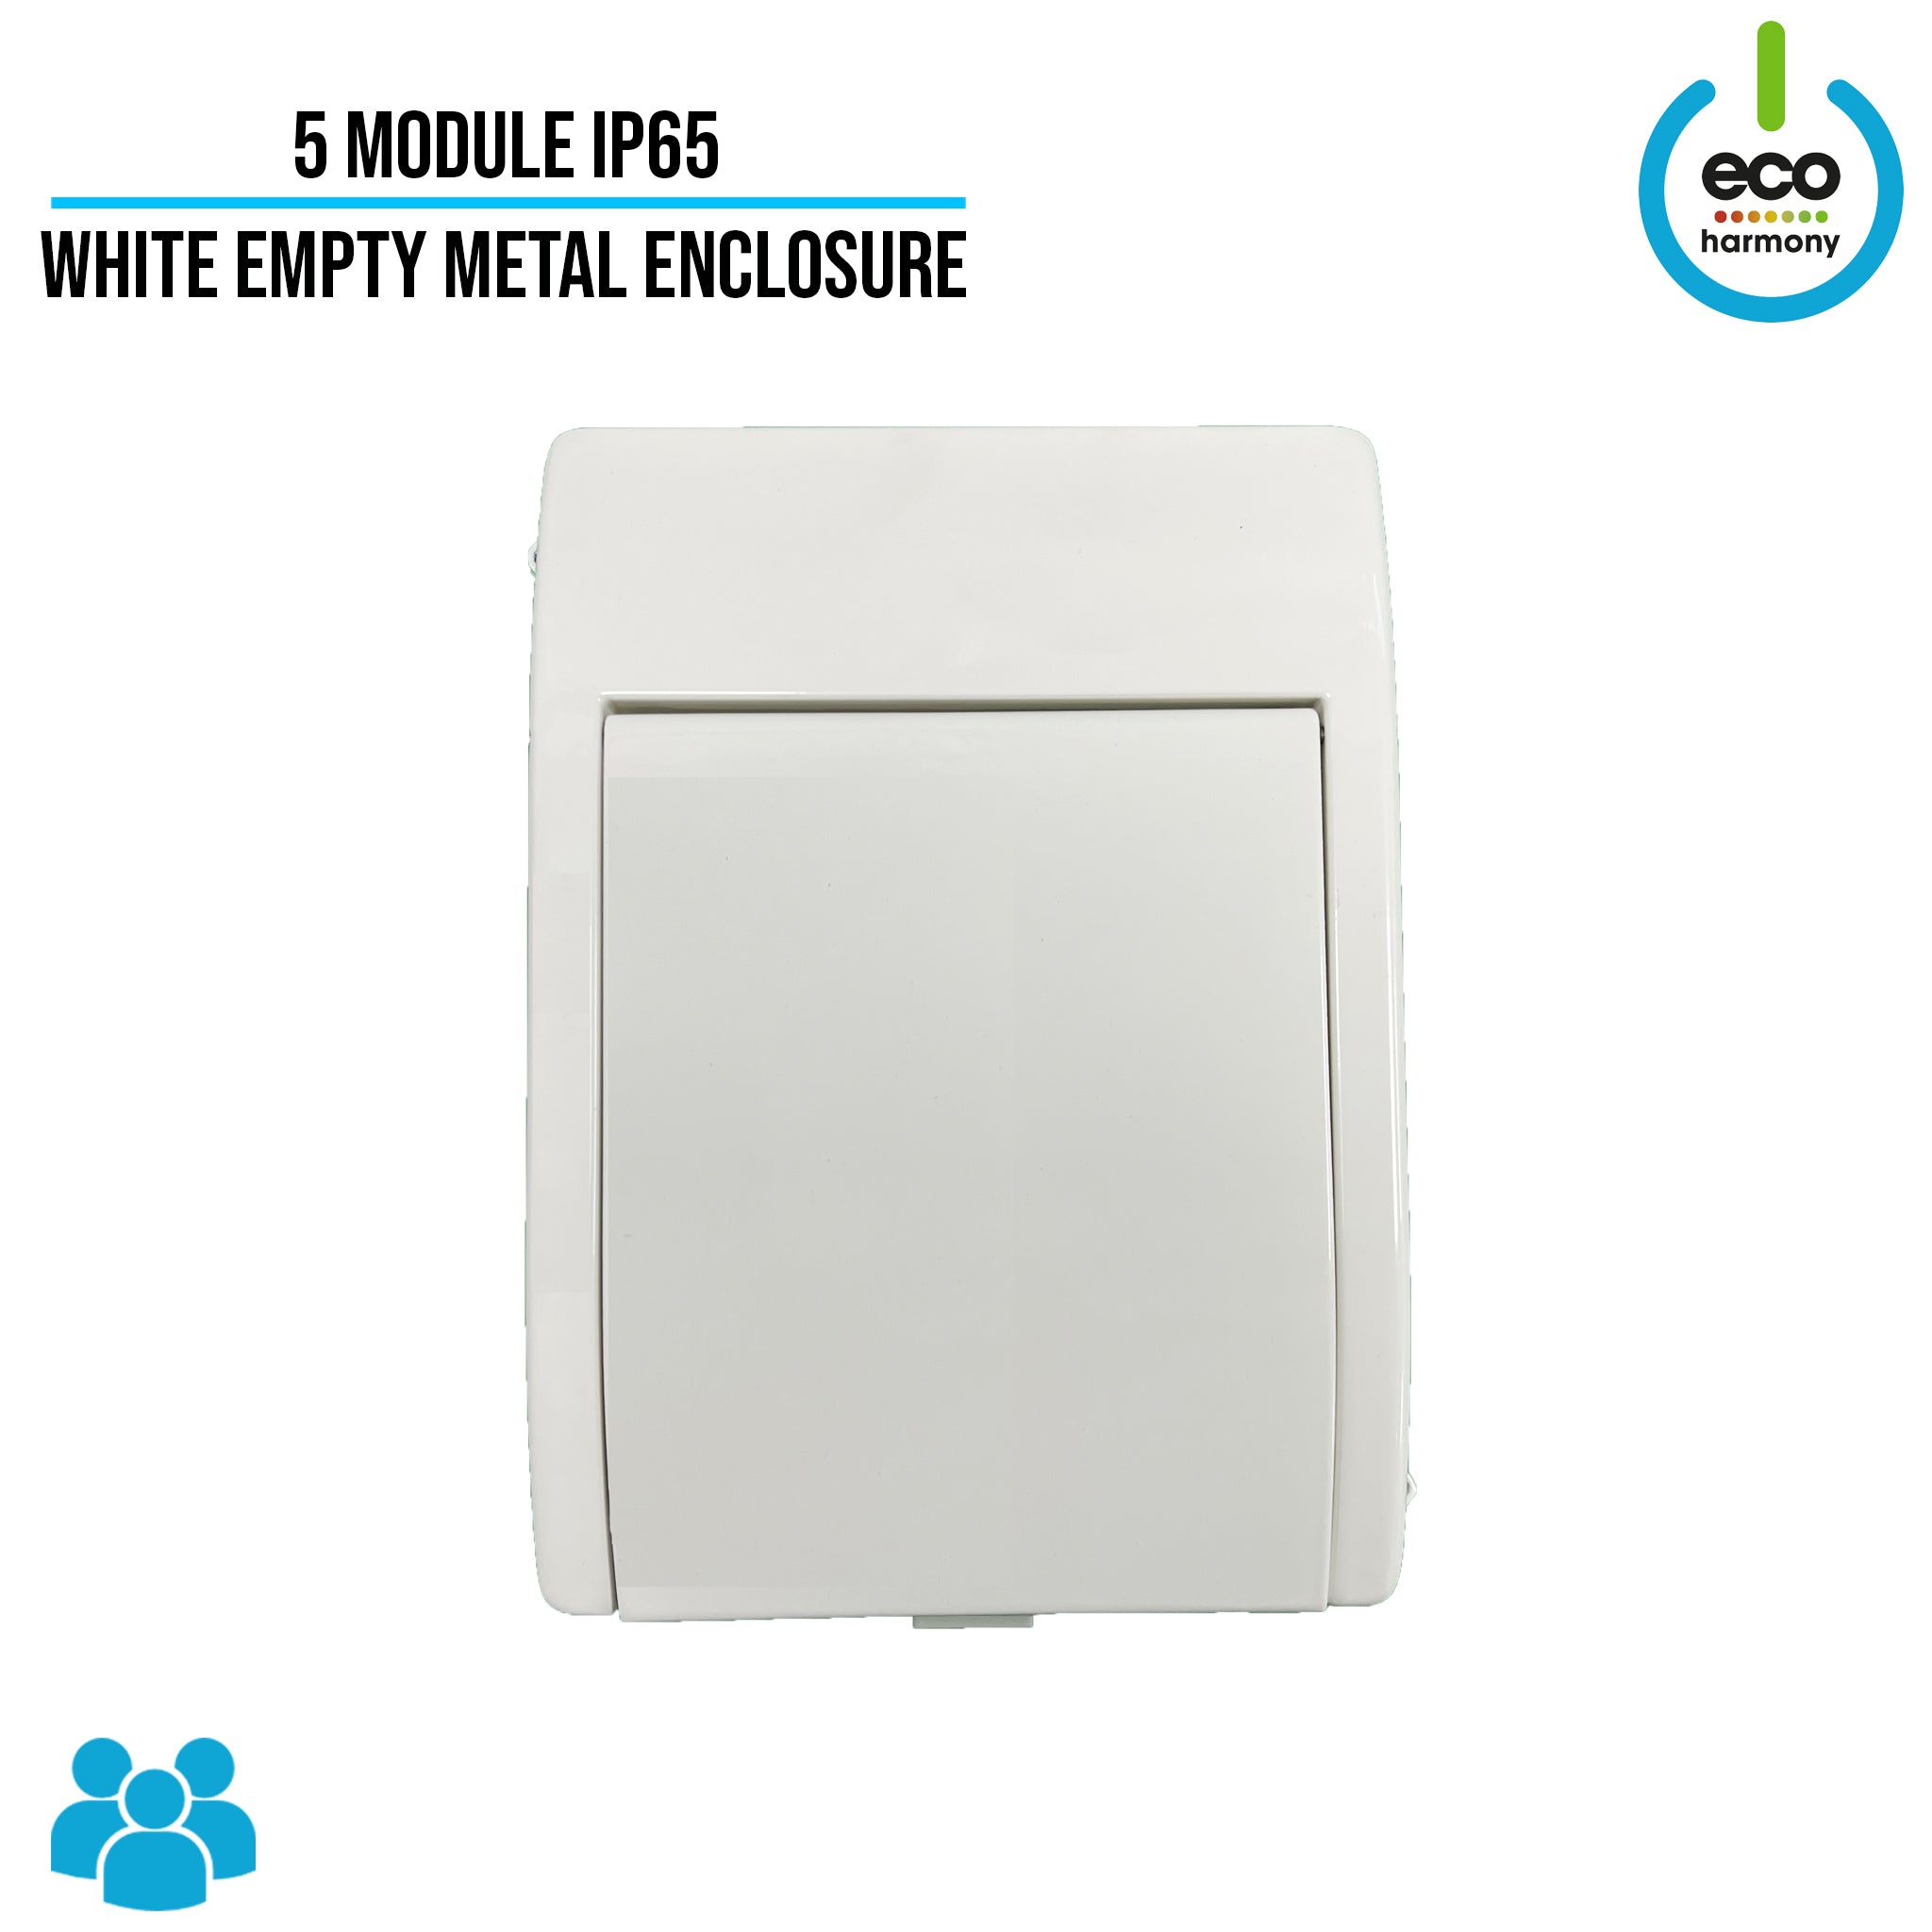 5 Module IP65 White Empty Metal Enclosure